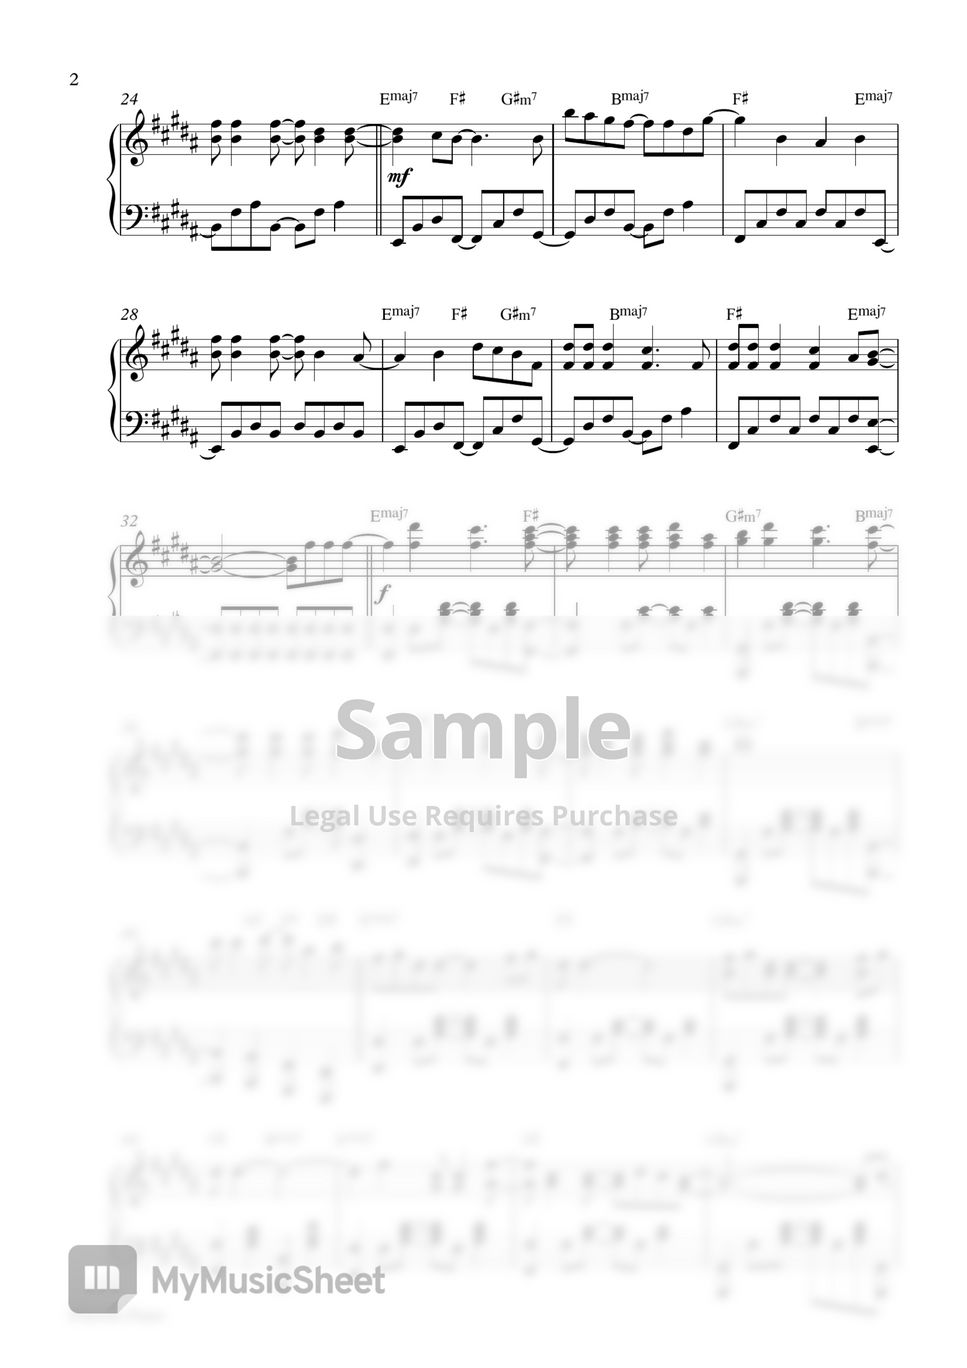 SEVENTEEN - Rock with you (2 PDF: in Original Key B Major & Easier Key C Major) by Pianella Piano